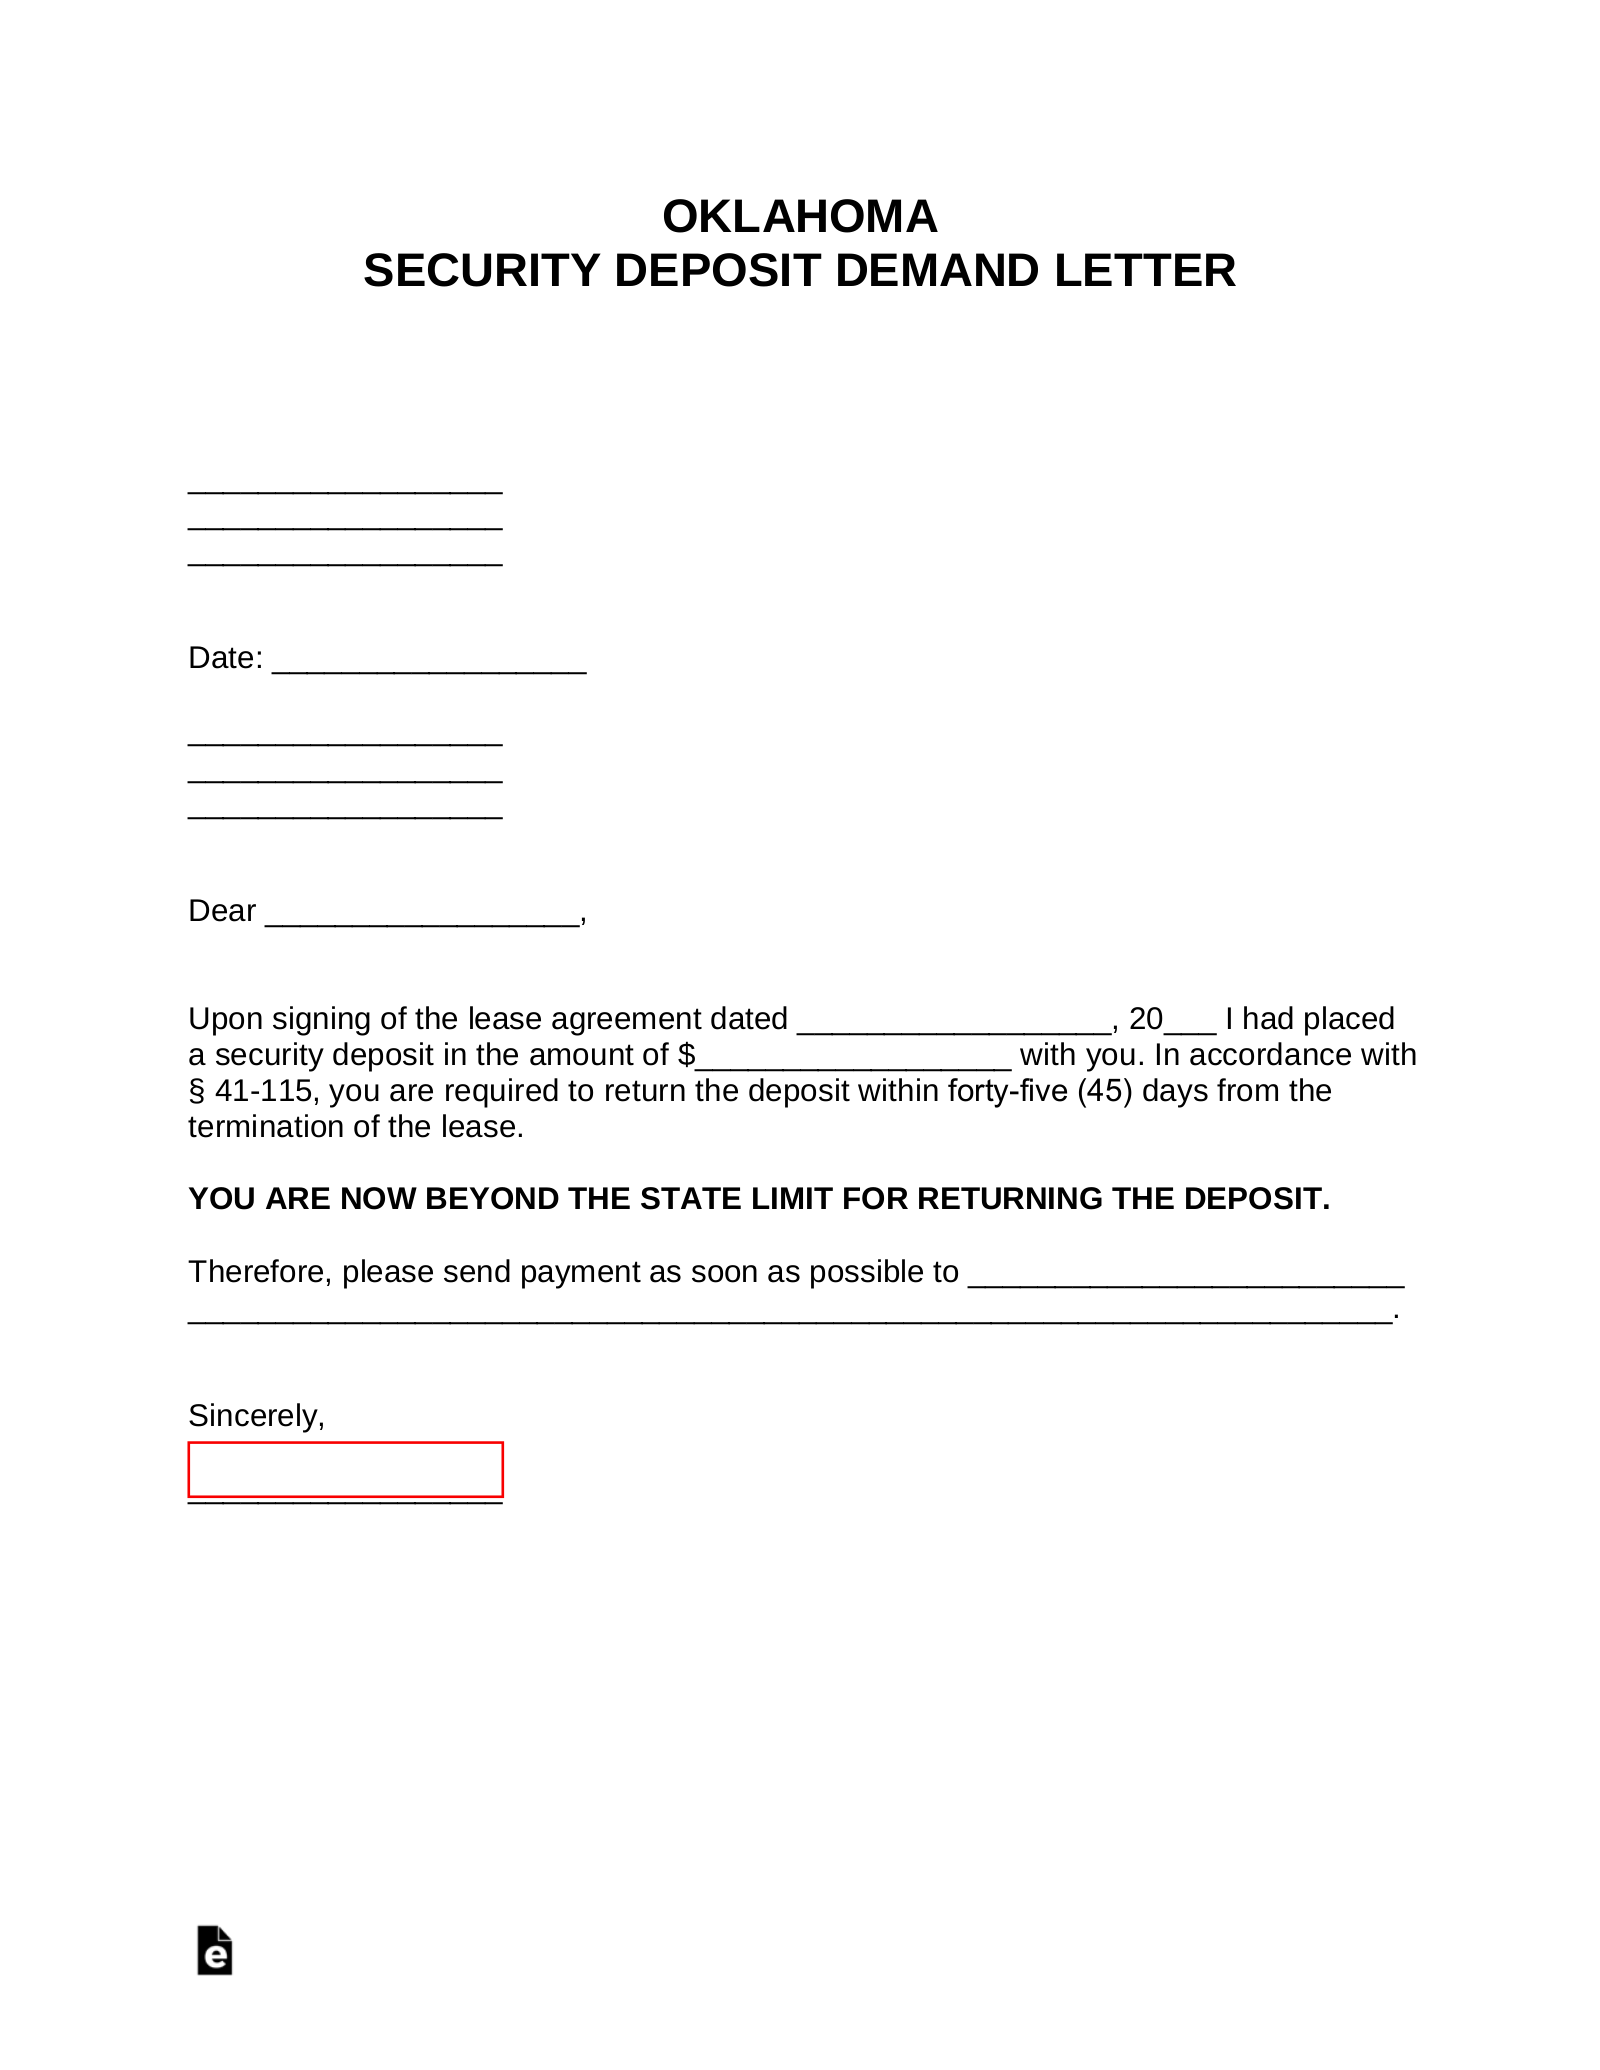 Oklahoma Security Deposit Demand Letter